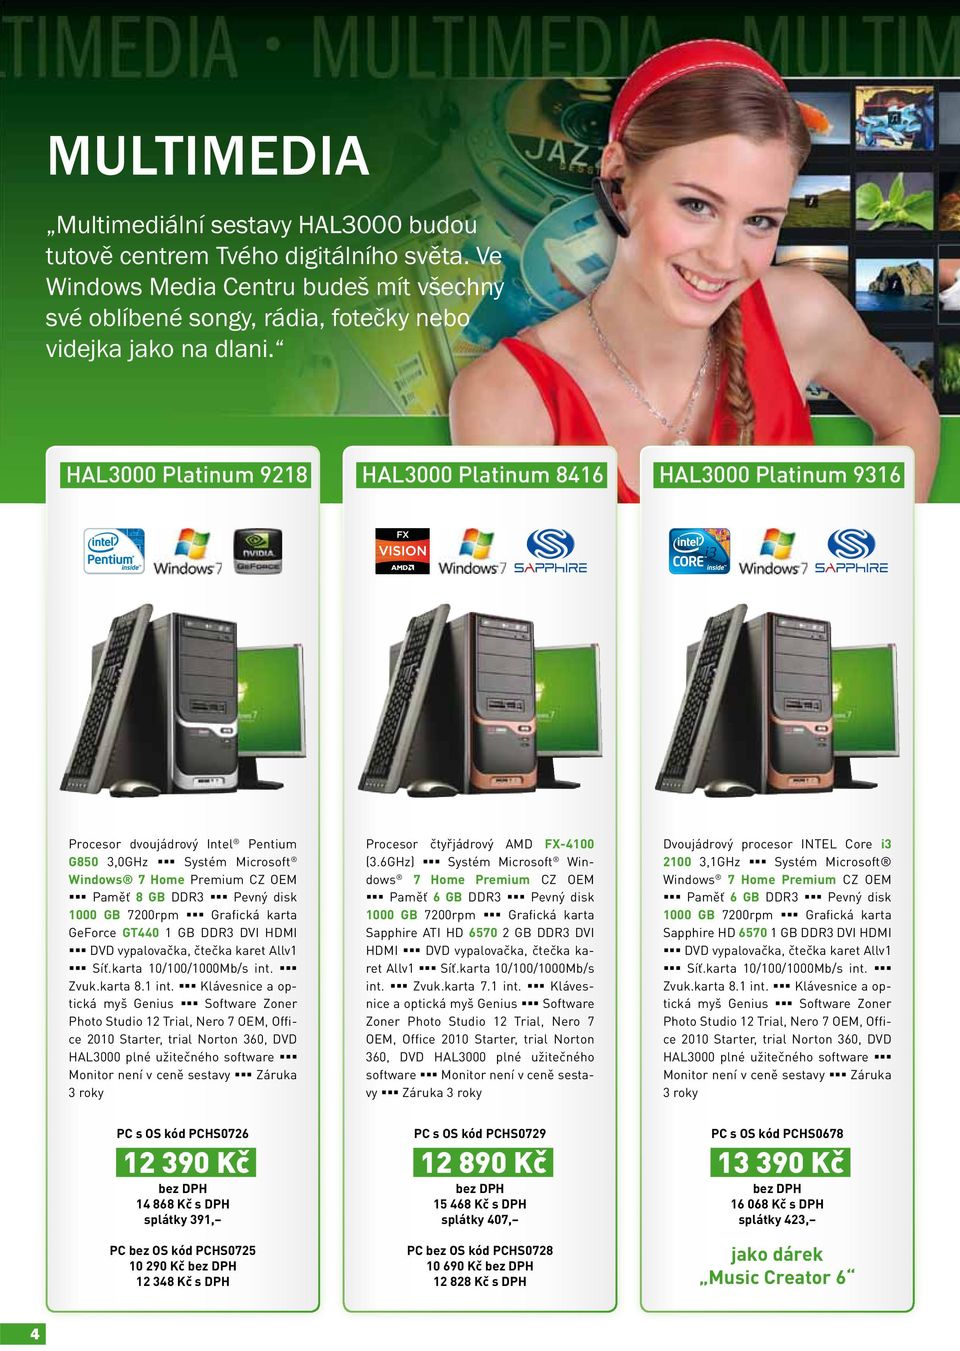 7200rpm Grafická karta GeForce GT440 1 GB DDR3 DVI HDMI DVD vypalovačka, čtečka karet Allv1 Síť.karta 10/100/1000Mb/s int. Zvuk.karta 8.1 int.